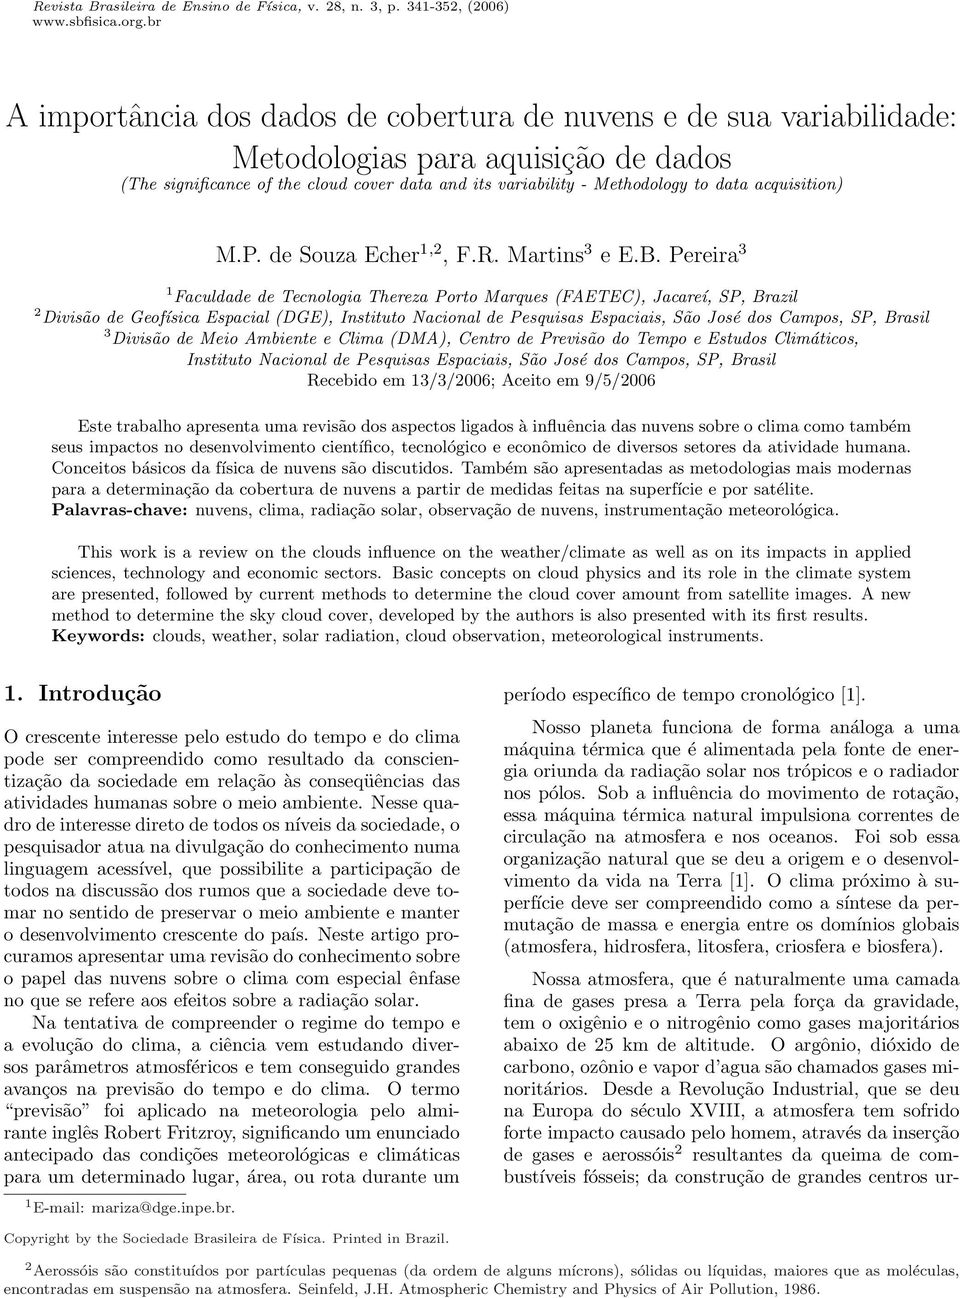 acquisition) M.P. de Souza Echer 1,2, F.R. Martins 3 e E.B.